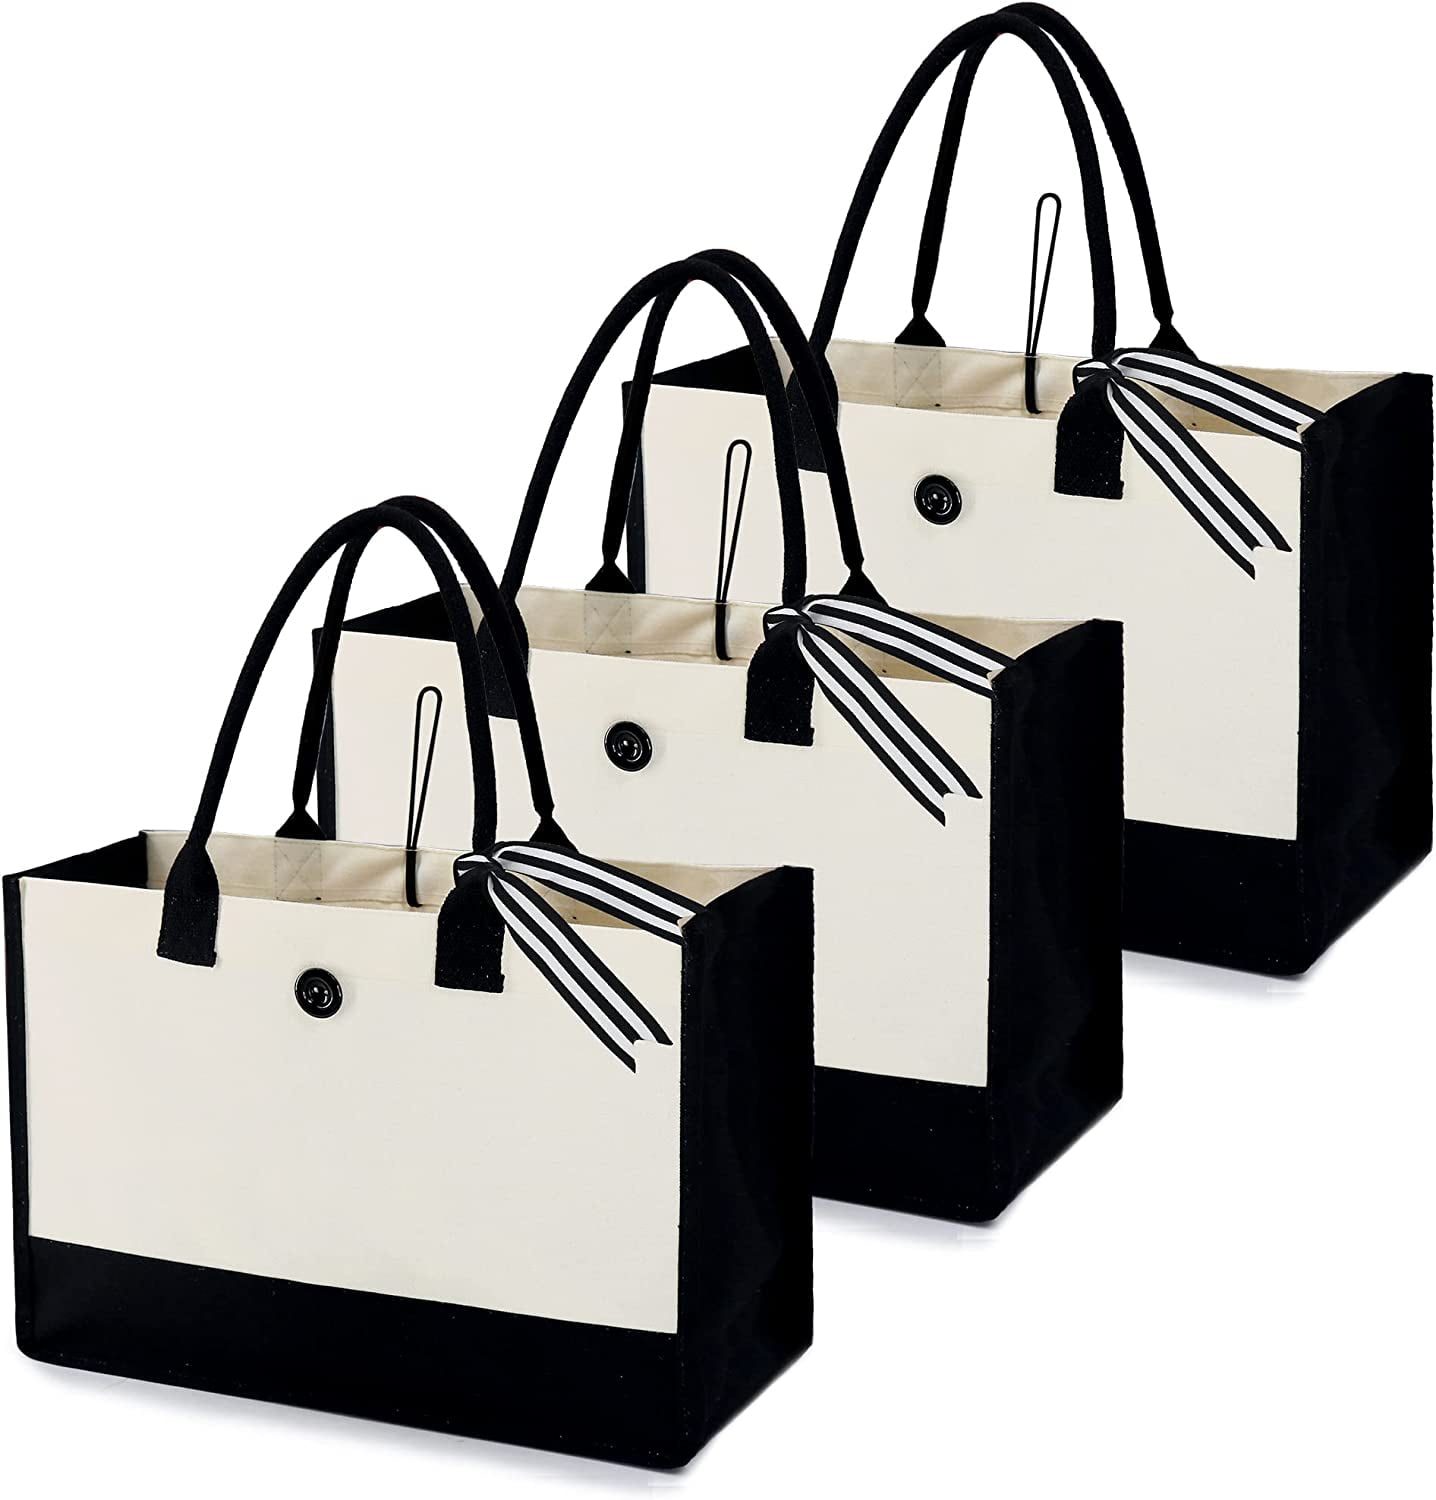 24 Pack - Blank Natural Color Canvas Tote Bags - Wholesale Plain Tote Bags  Bulk